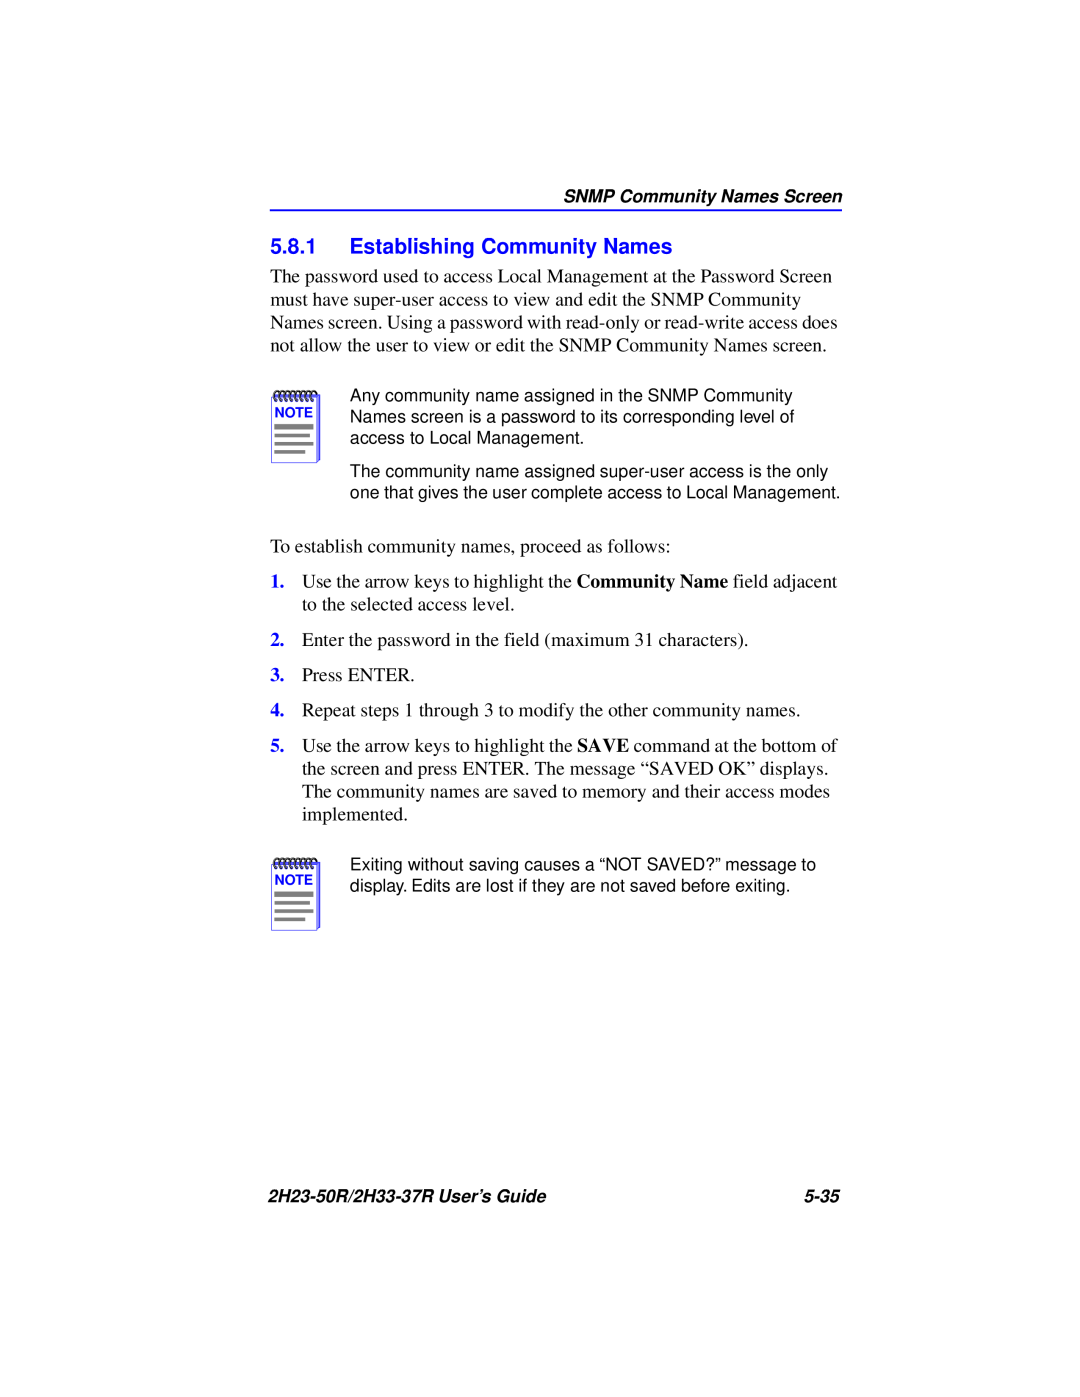 Cabletron Systems 2H23-50R, 2H33-37R manual Establishing Community Names 